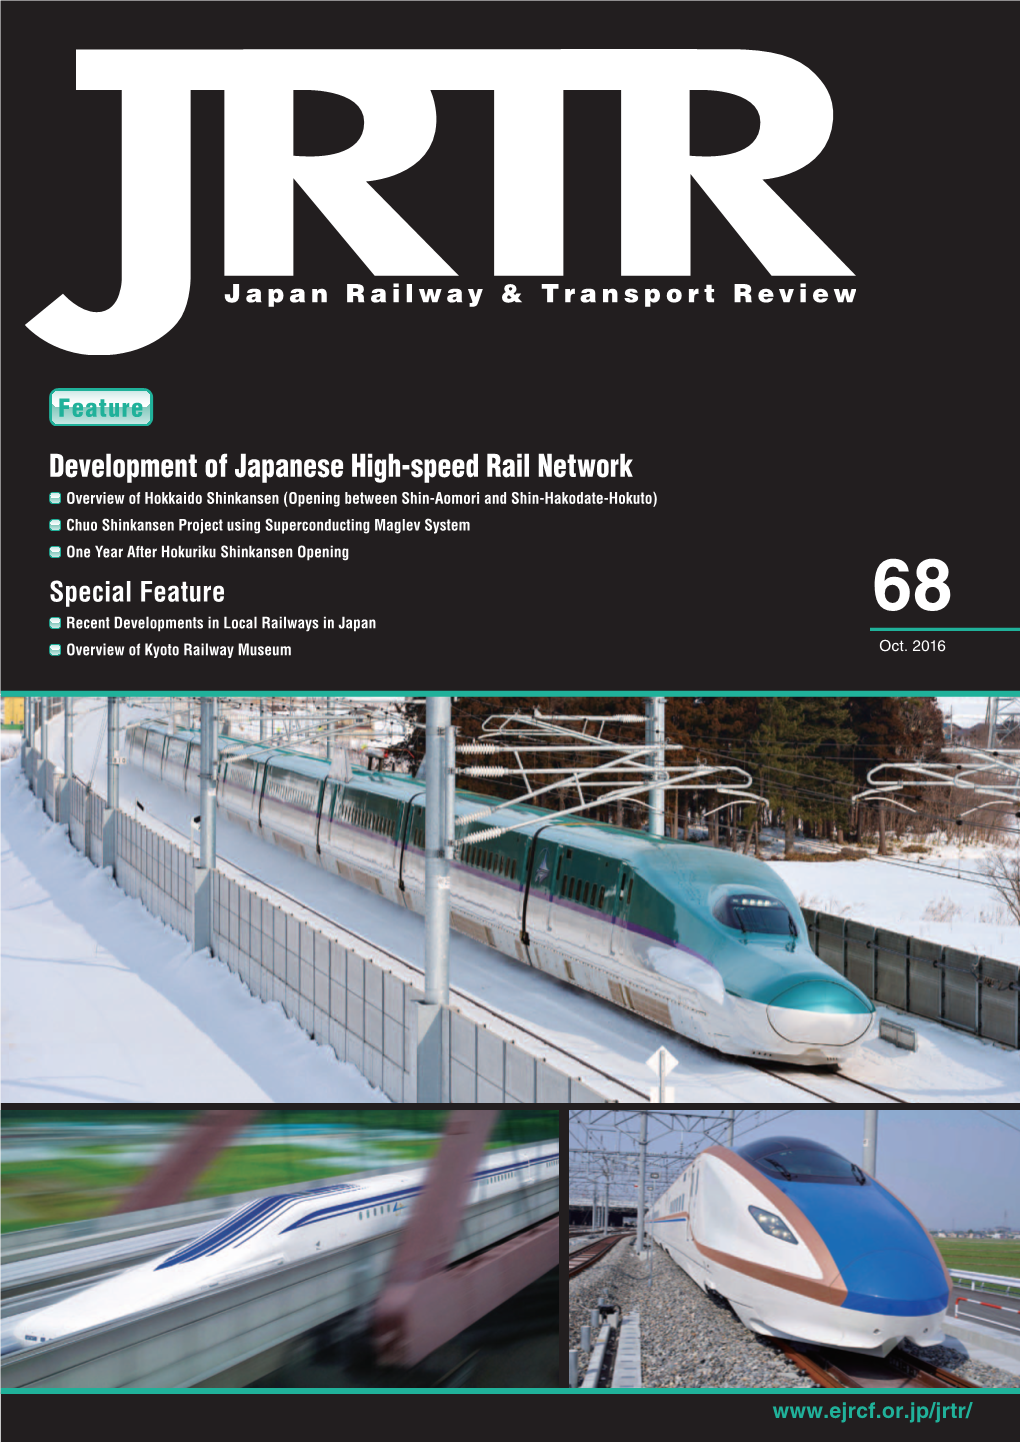 Development of Japanese High-Speed Rail Network